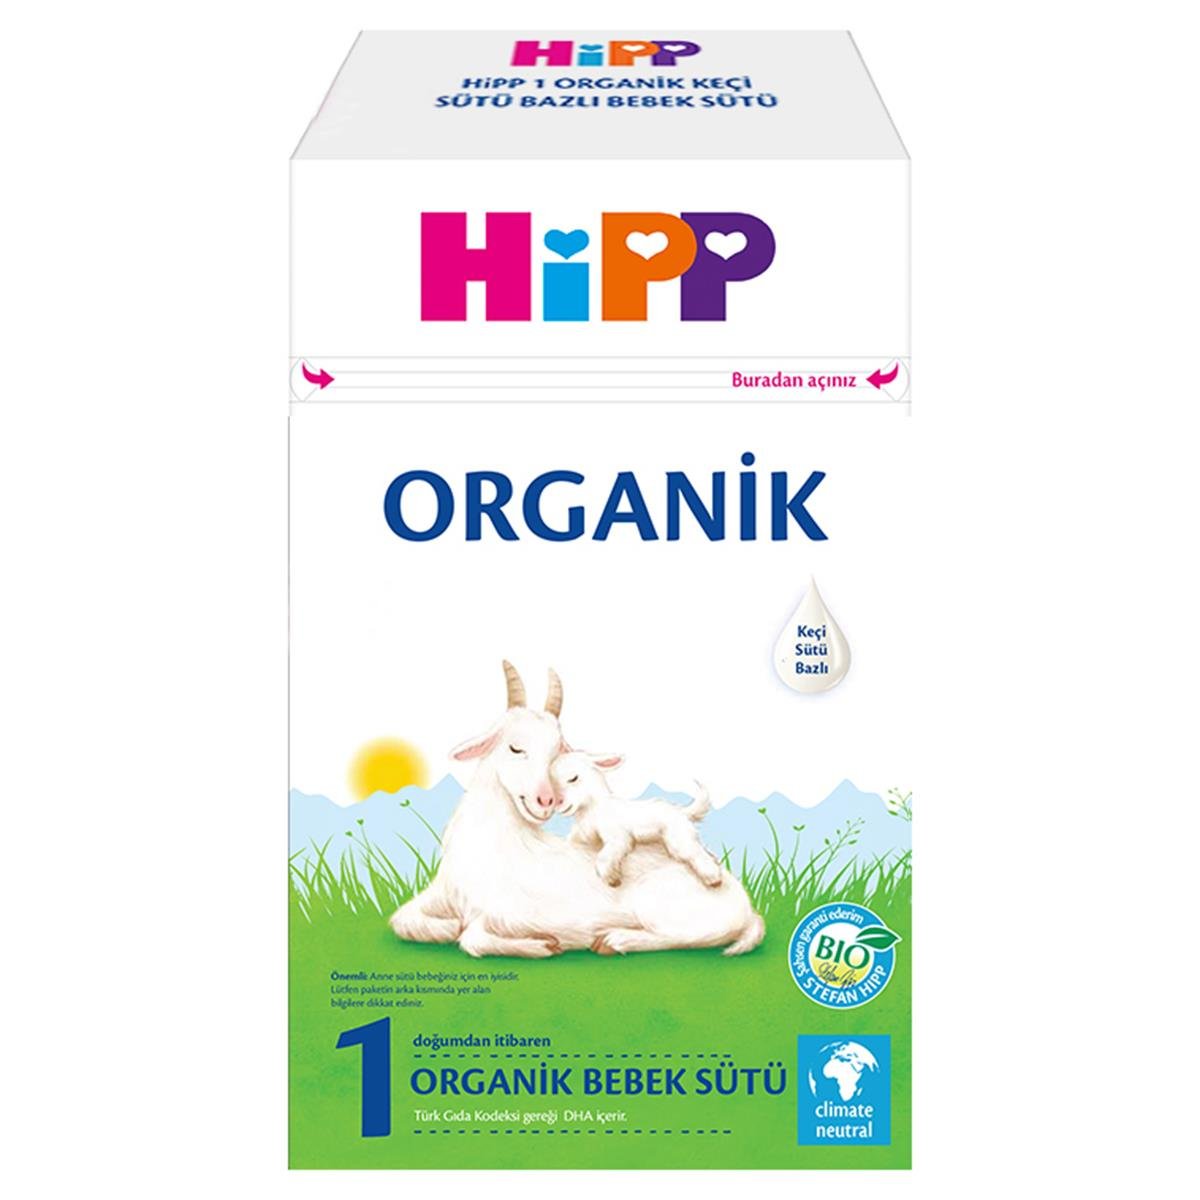 Hipp 1 Organik Keçi Sütlü Bebek Sütü 400 gr 0-6 Ay